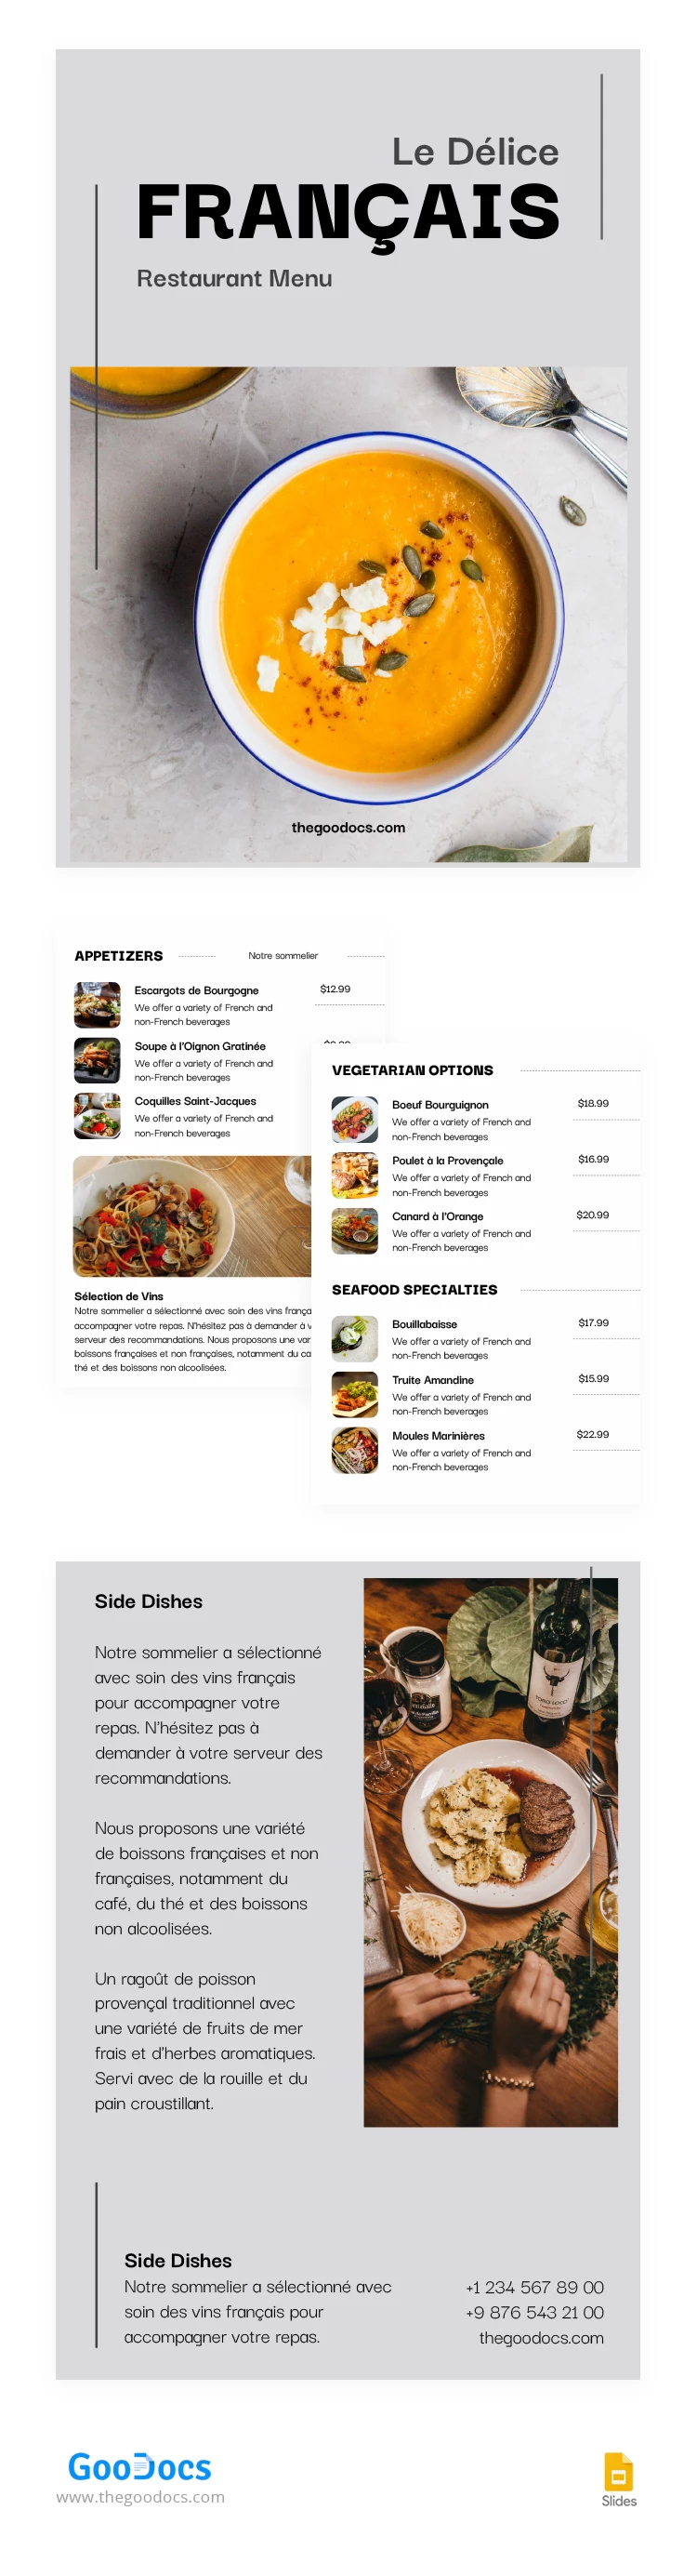 Menu del ristorante francese elegante grigio - free Google Docs Template - 10067313